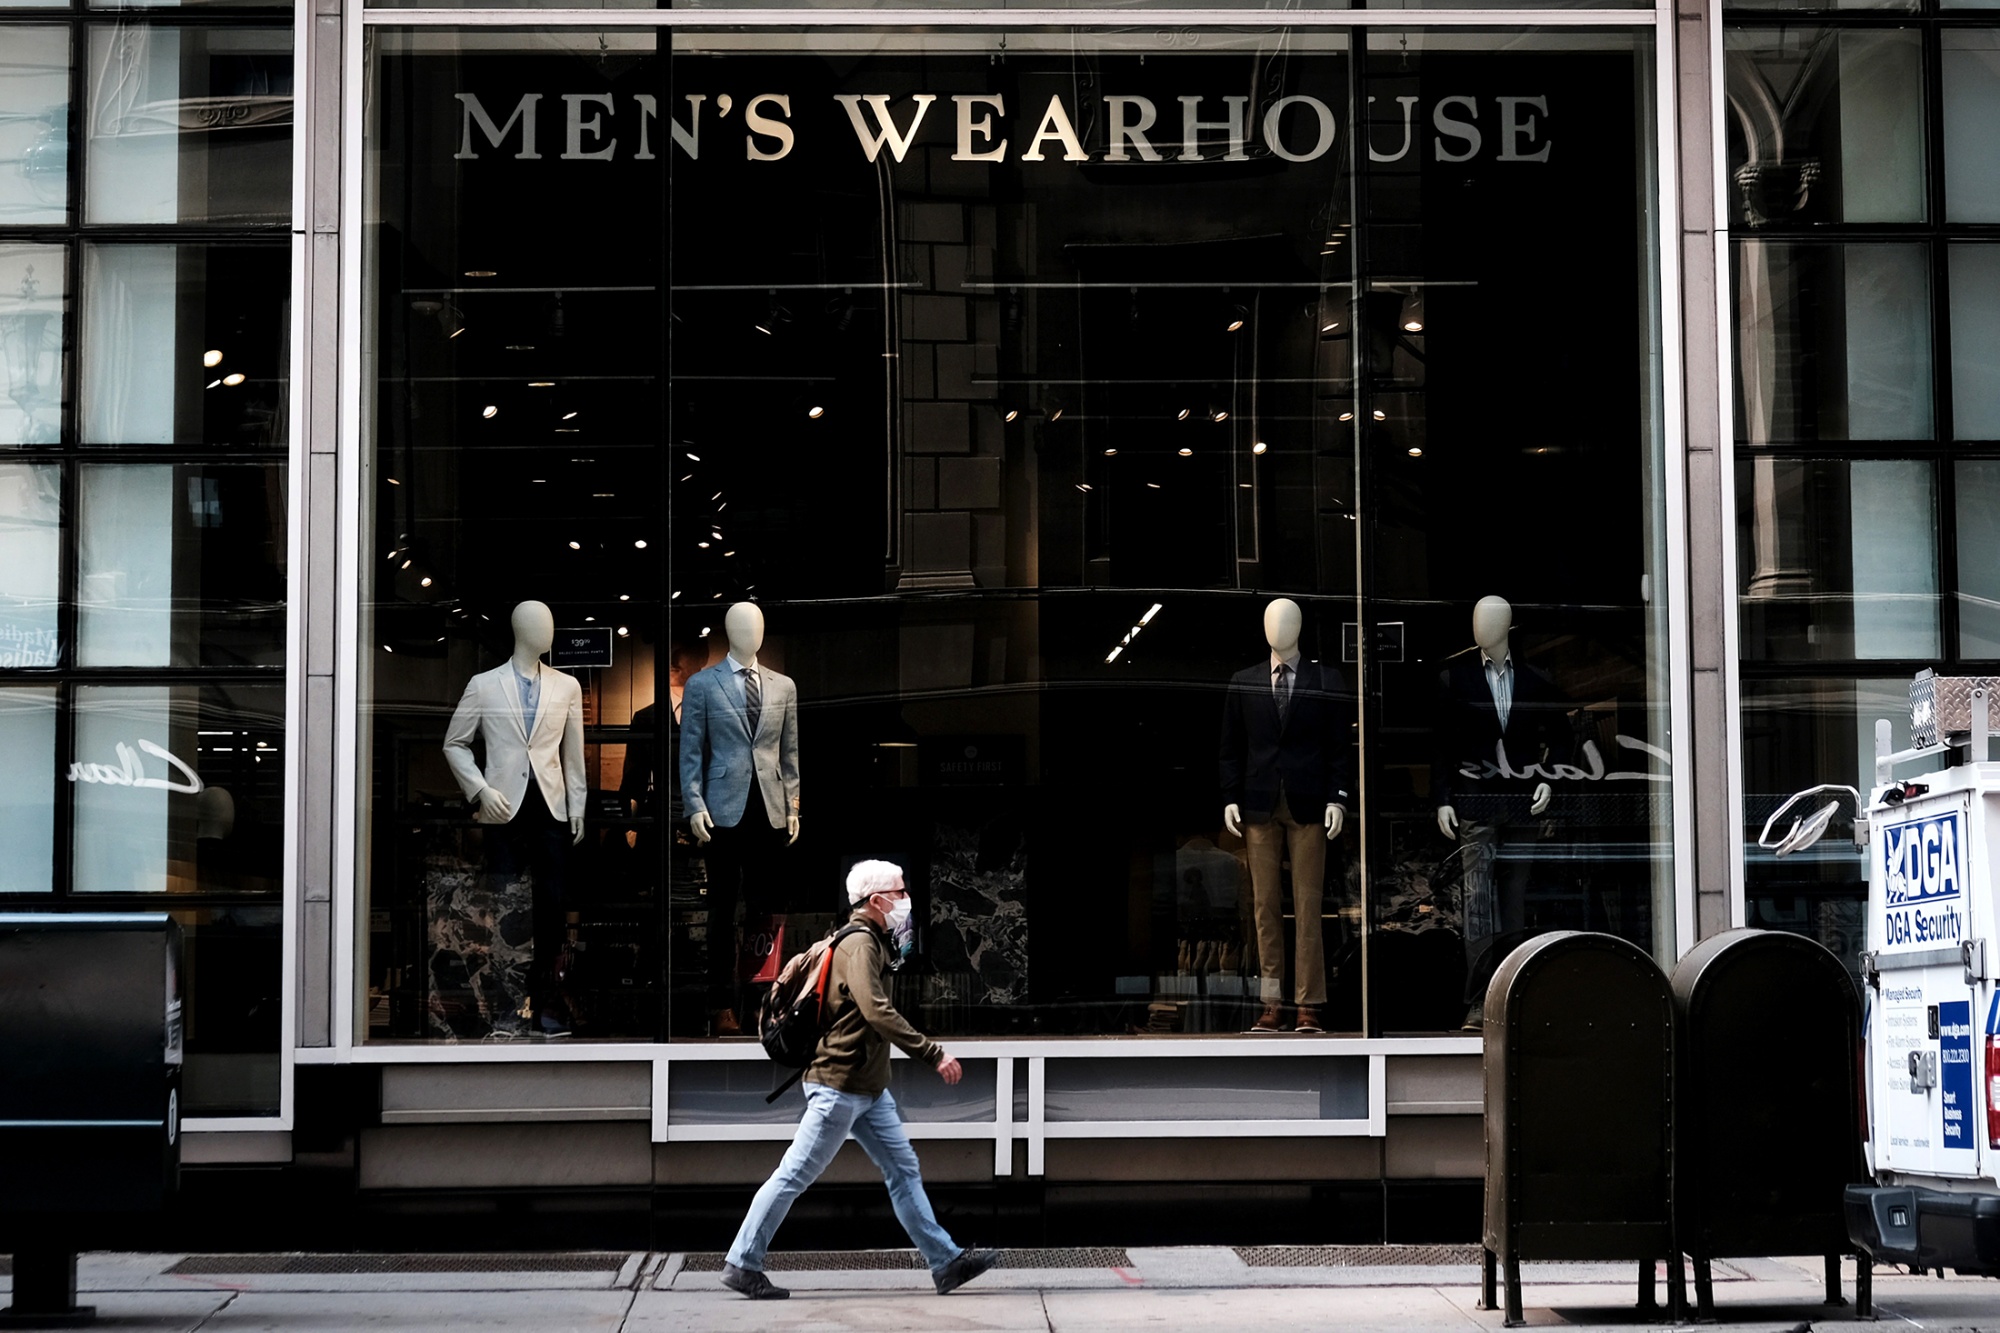 men's wearhouse stock price today - Heartening Webcast Fonction